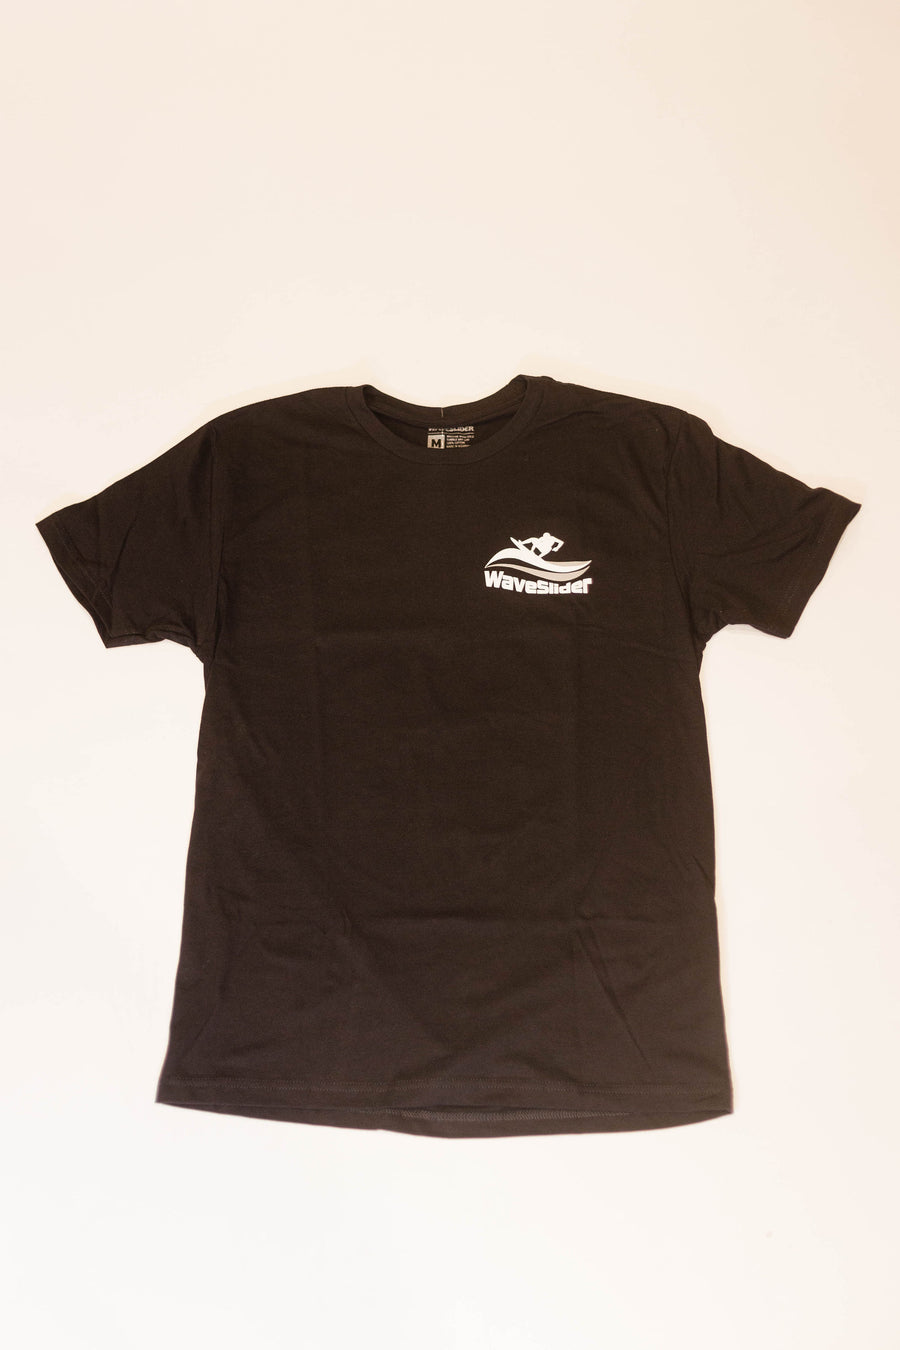 Waveslider Original Adult T-Shirt